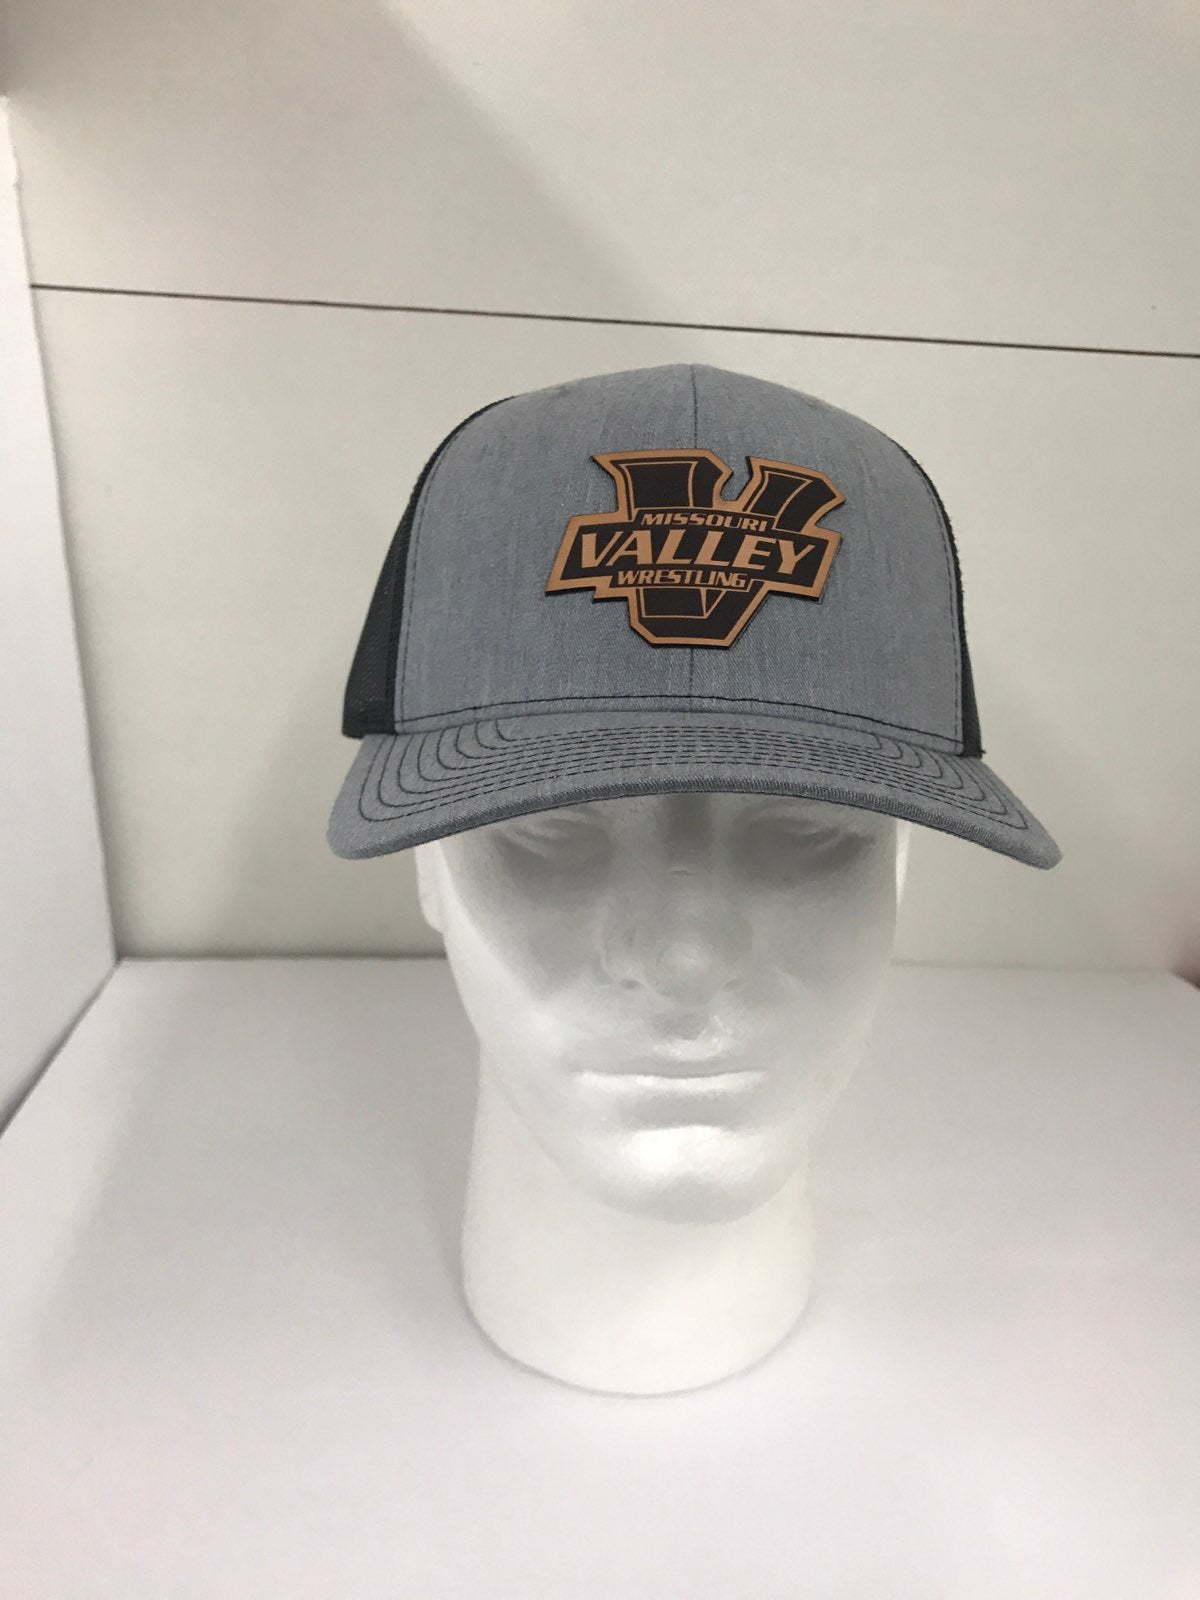 Missouri Valley Hat Richardson Mesh back adjustable hat with leather V patch